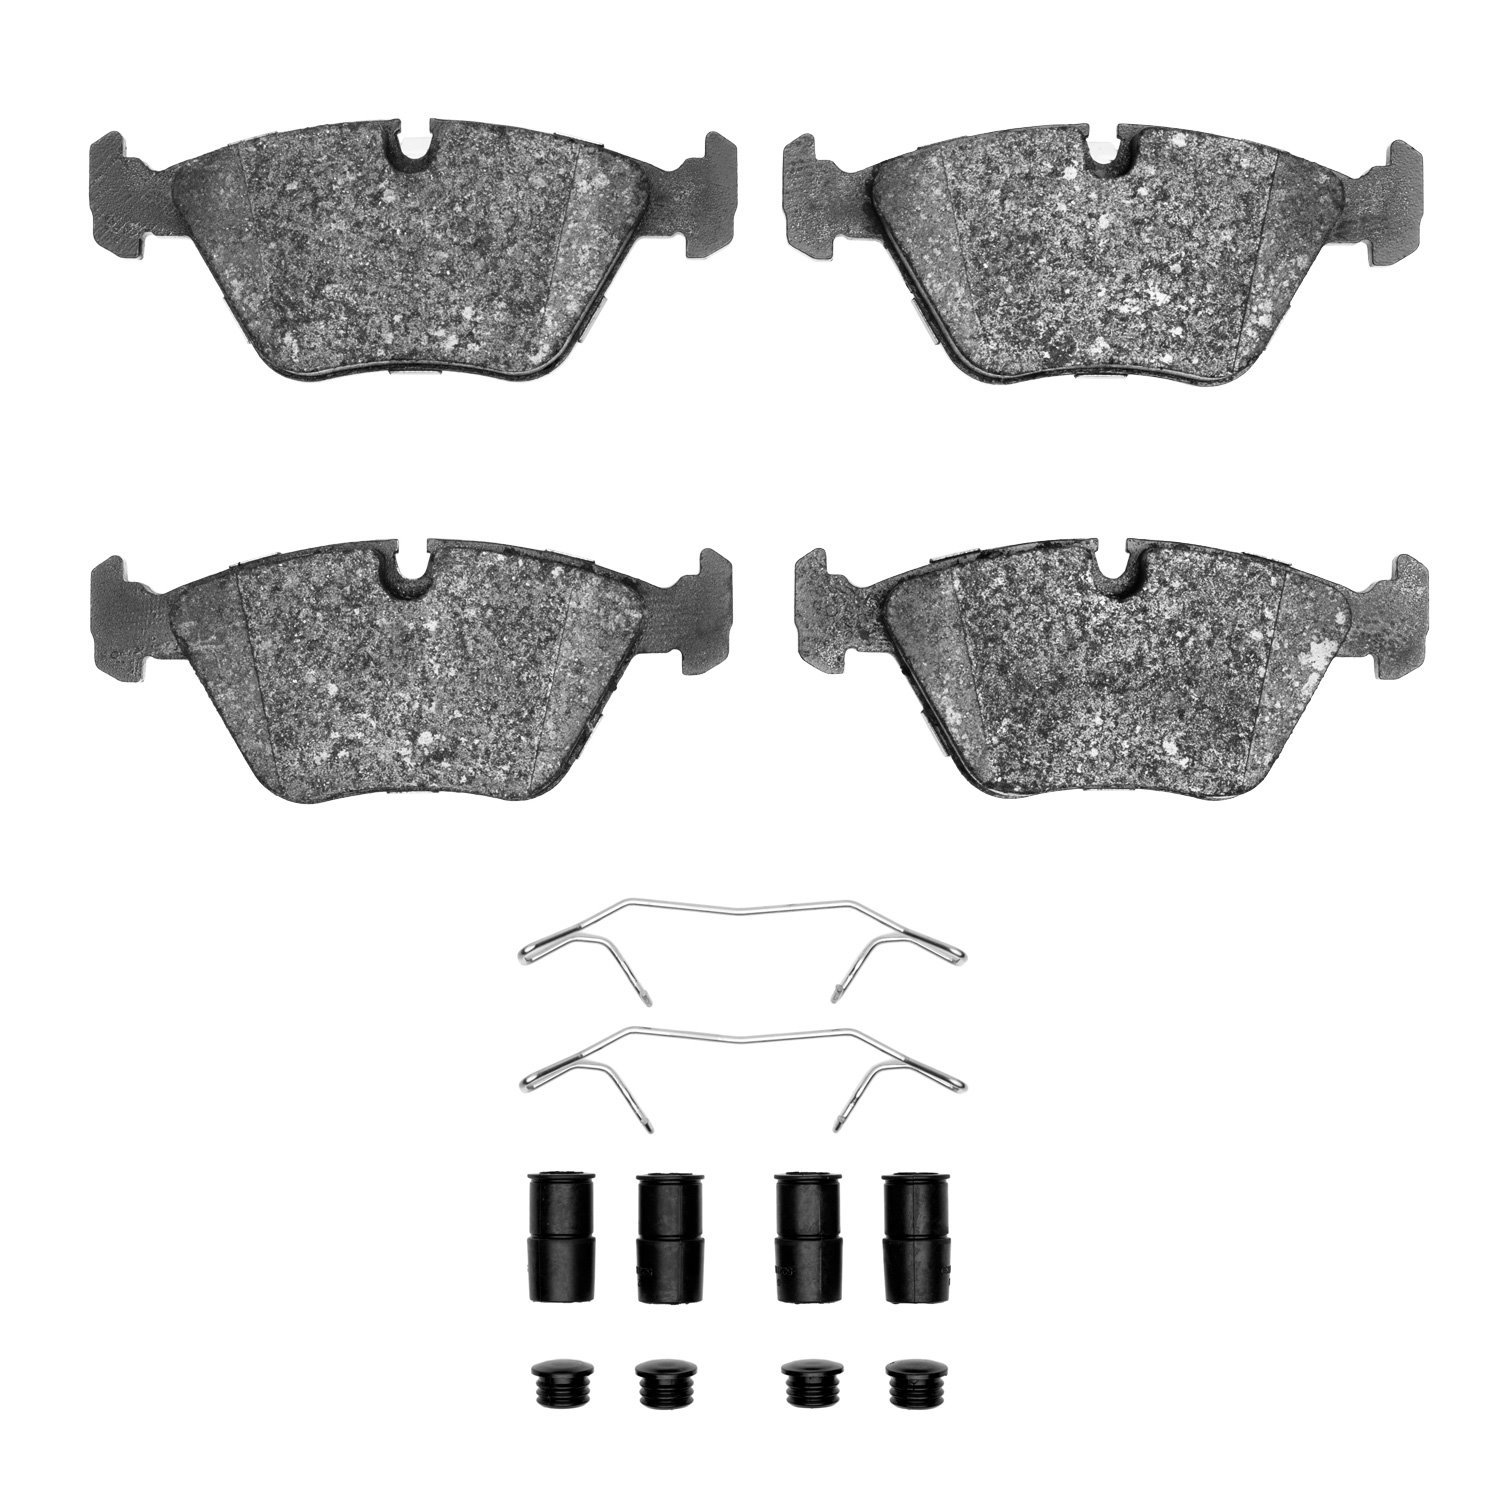 1600-0394-02 5000 Euro Ceramic Brake Pads & Hardware Kit, 1989-1991 Audi/Volkswagen, Position: Front